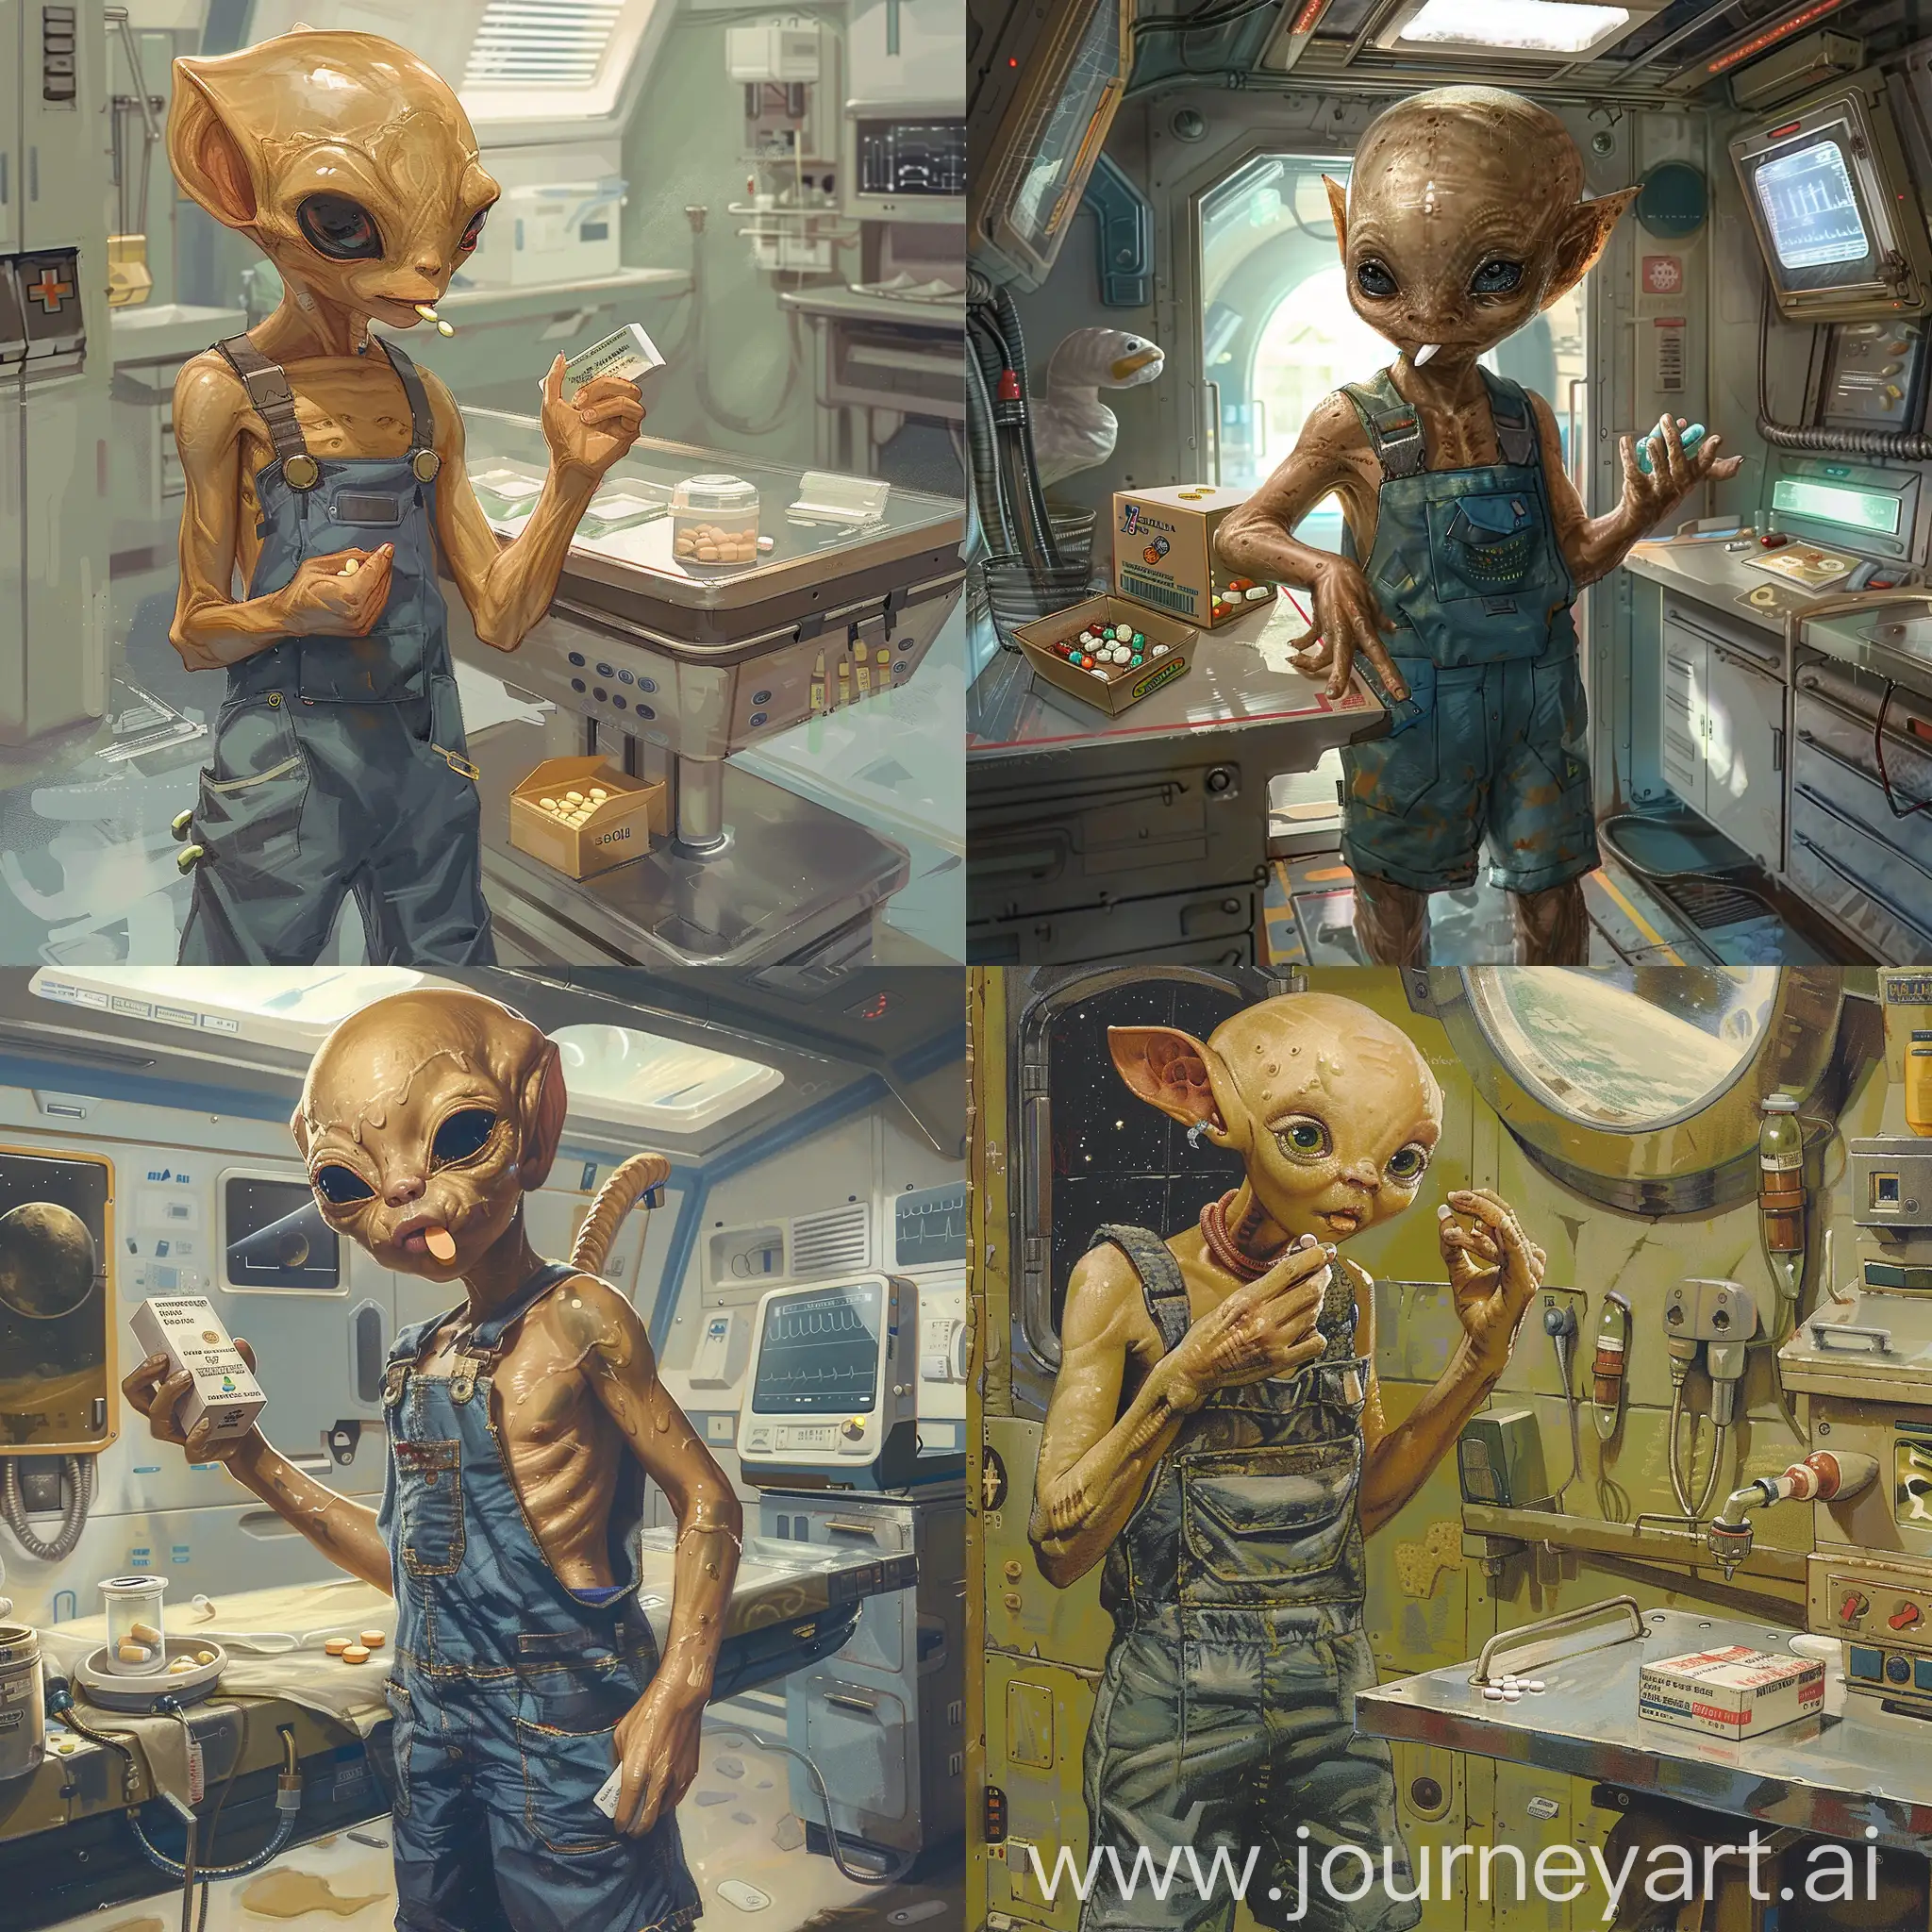 Curious-Alien-Boy-Examining-Medication-in-Space-Station-Med-Bay